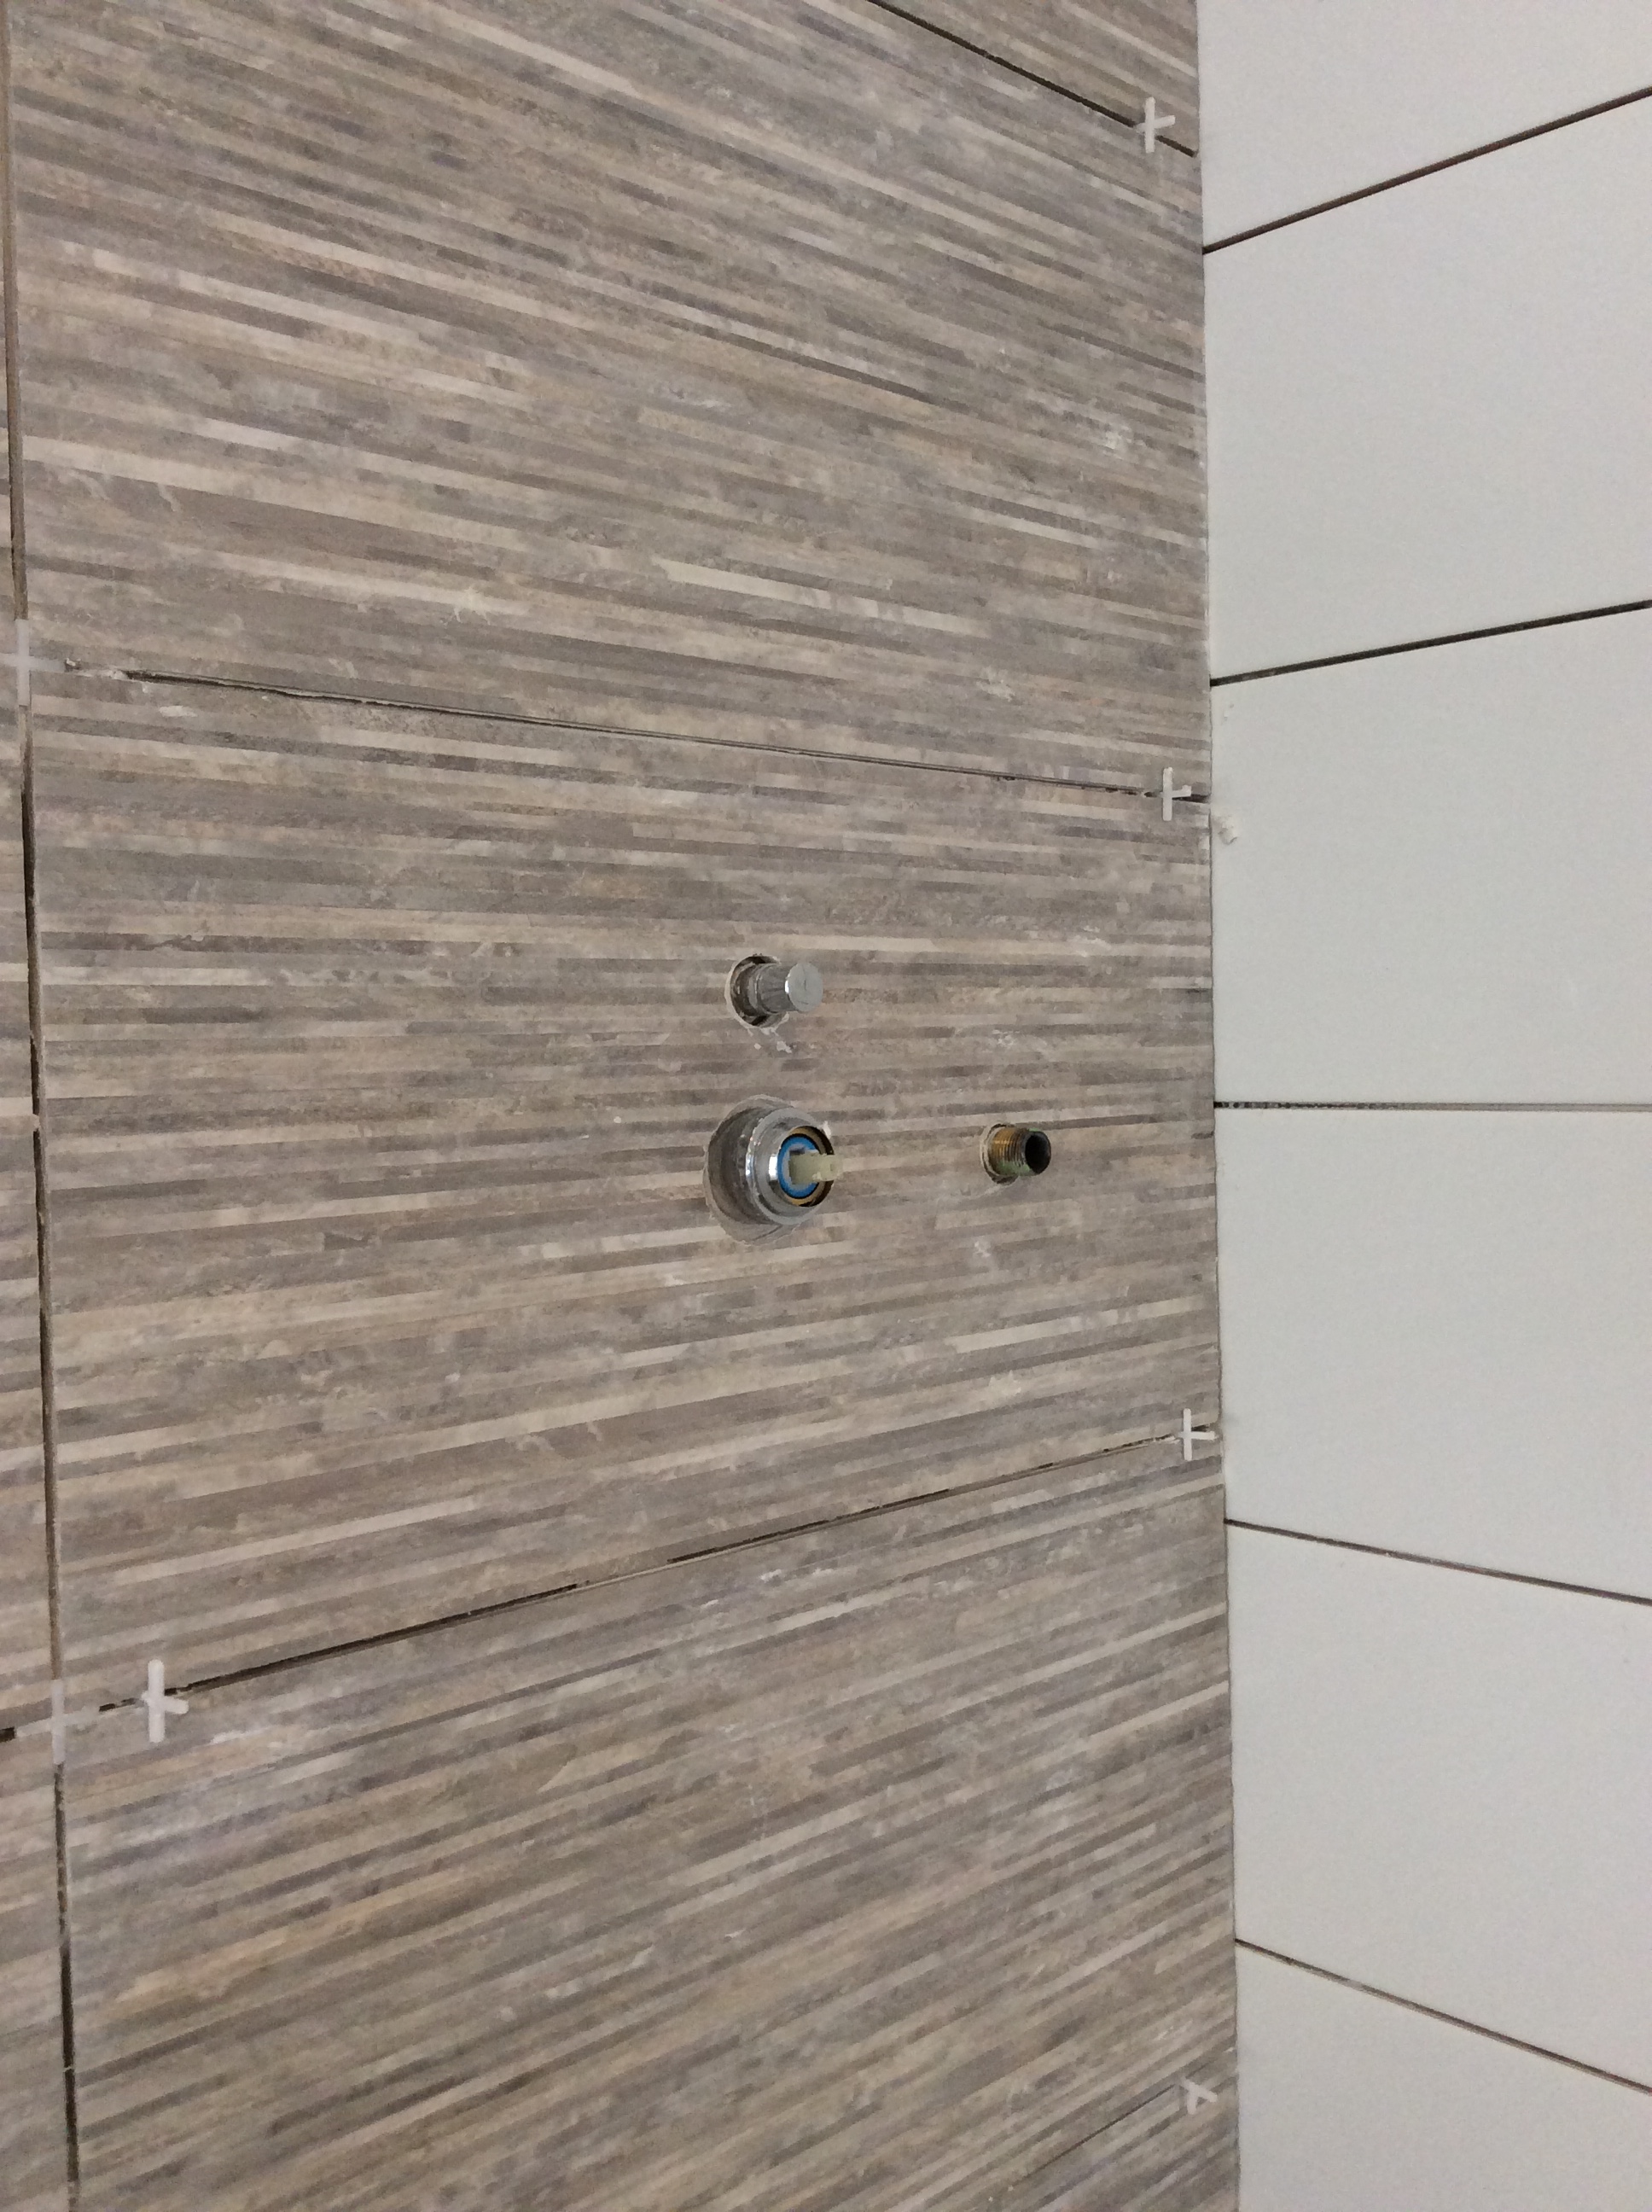 Bathroom tiling in progress